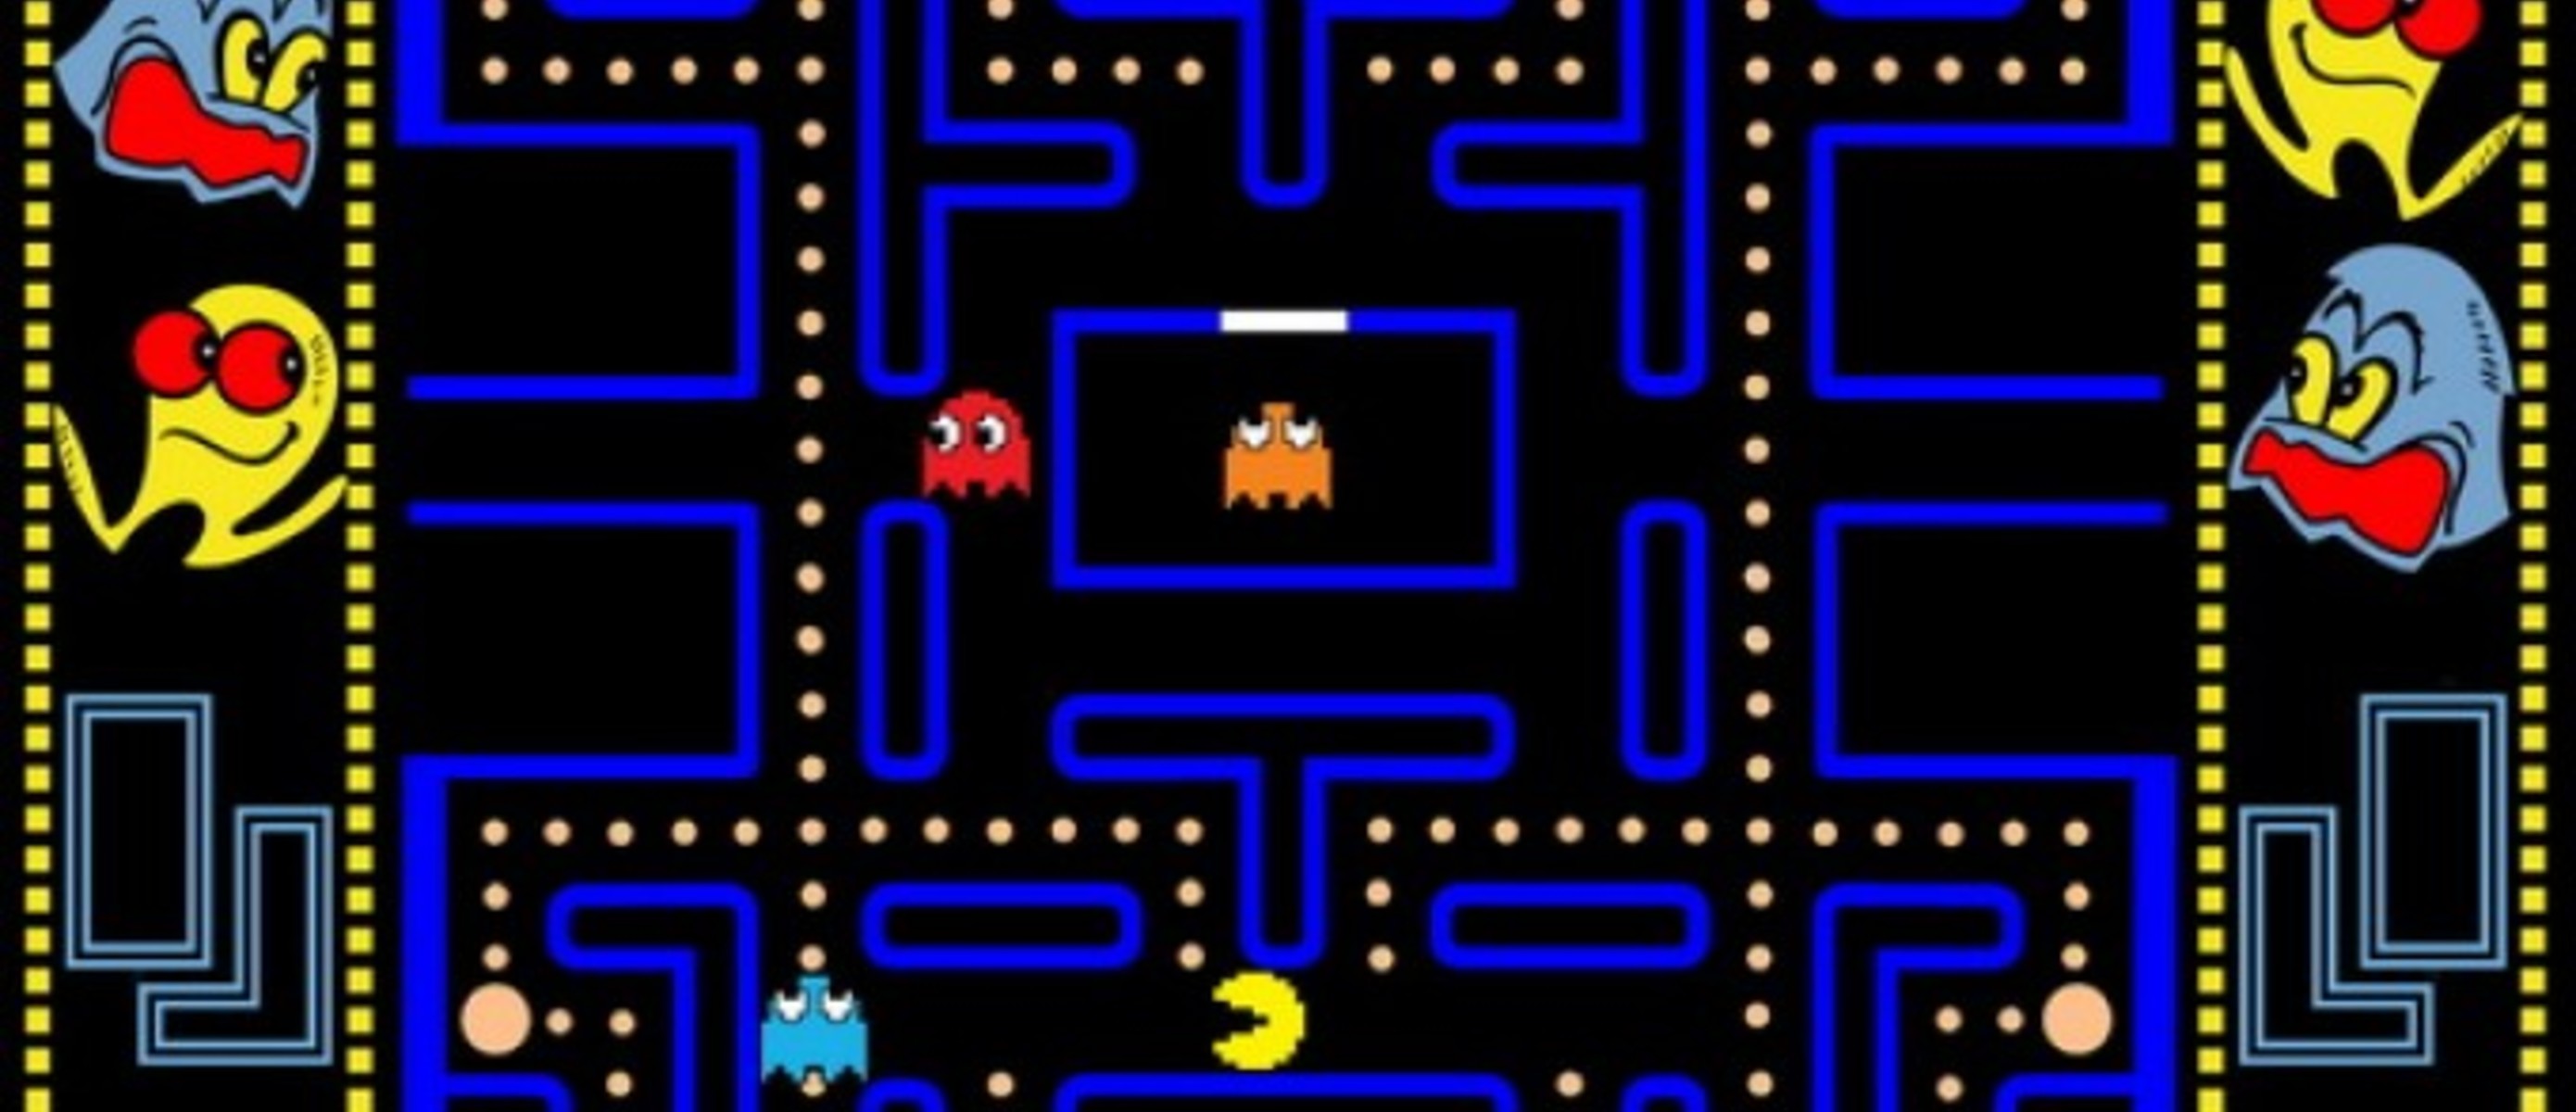 Pacman game. Pacman игра. Pac-man 1980. Pacman первая игра. Pack man игра.